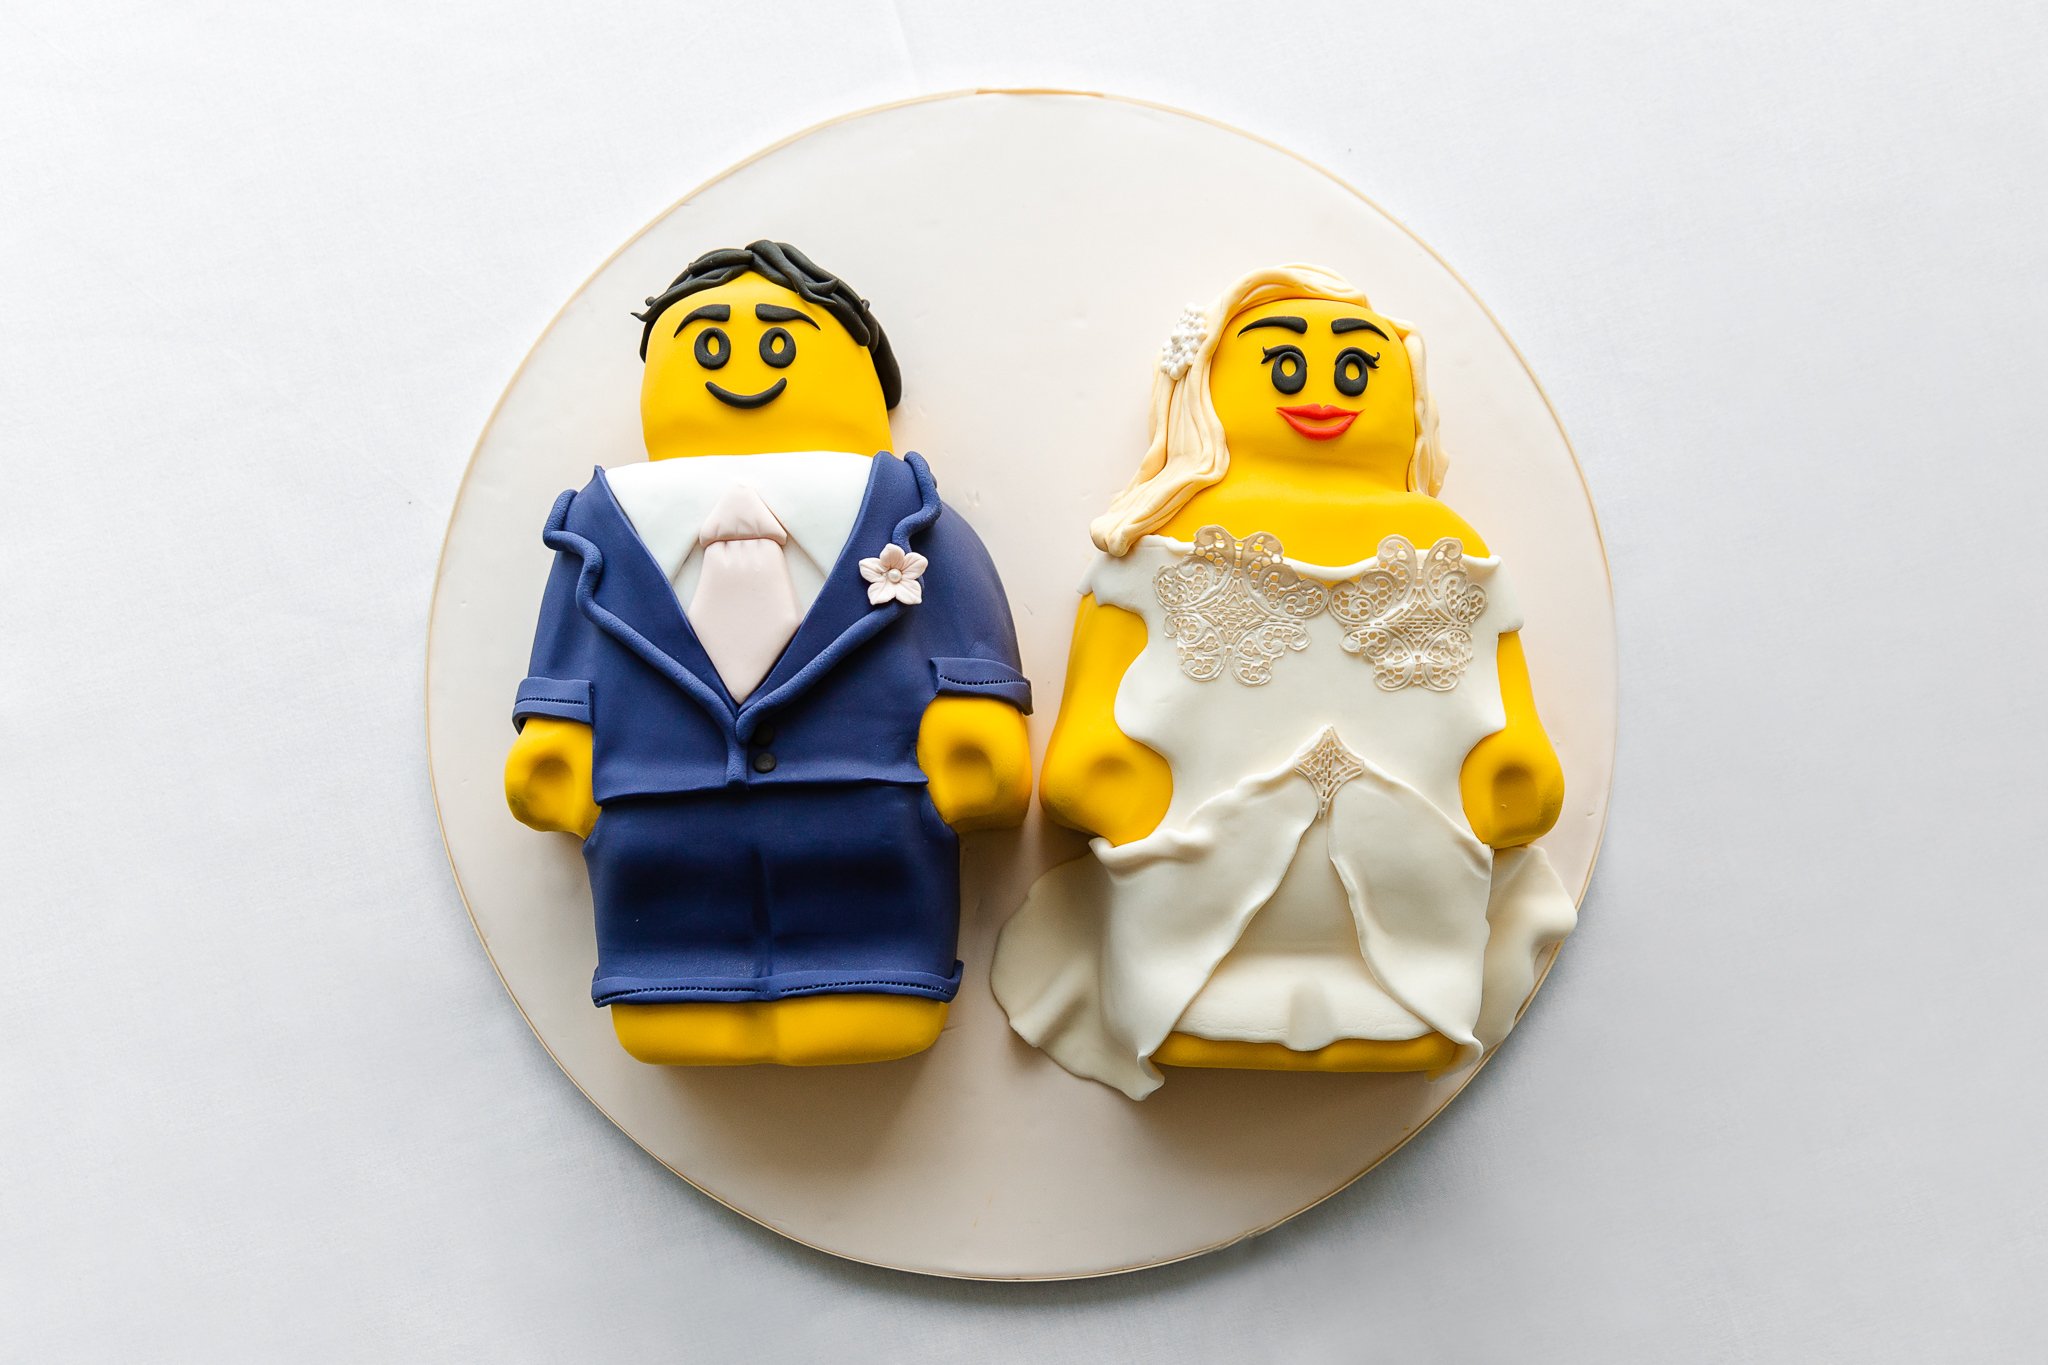 lego cake at cardiff bay wedding st davids hotel vocco